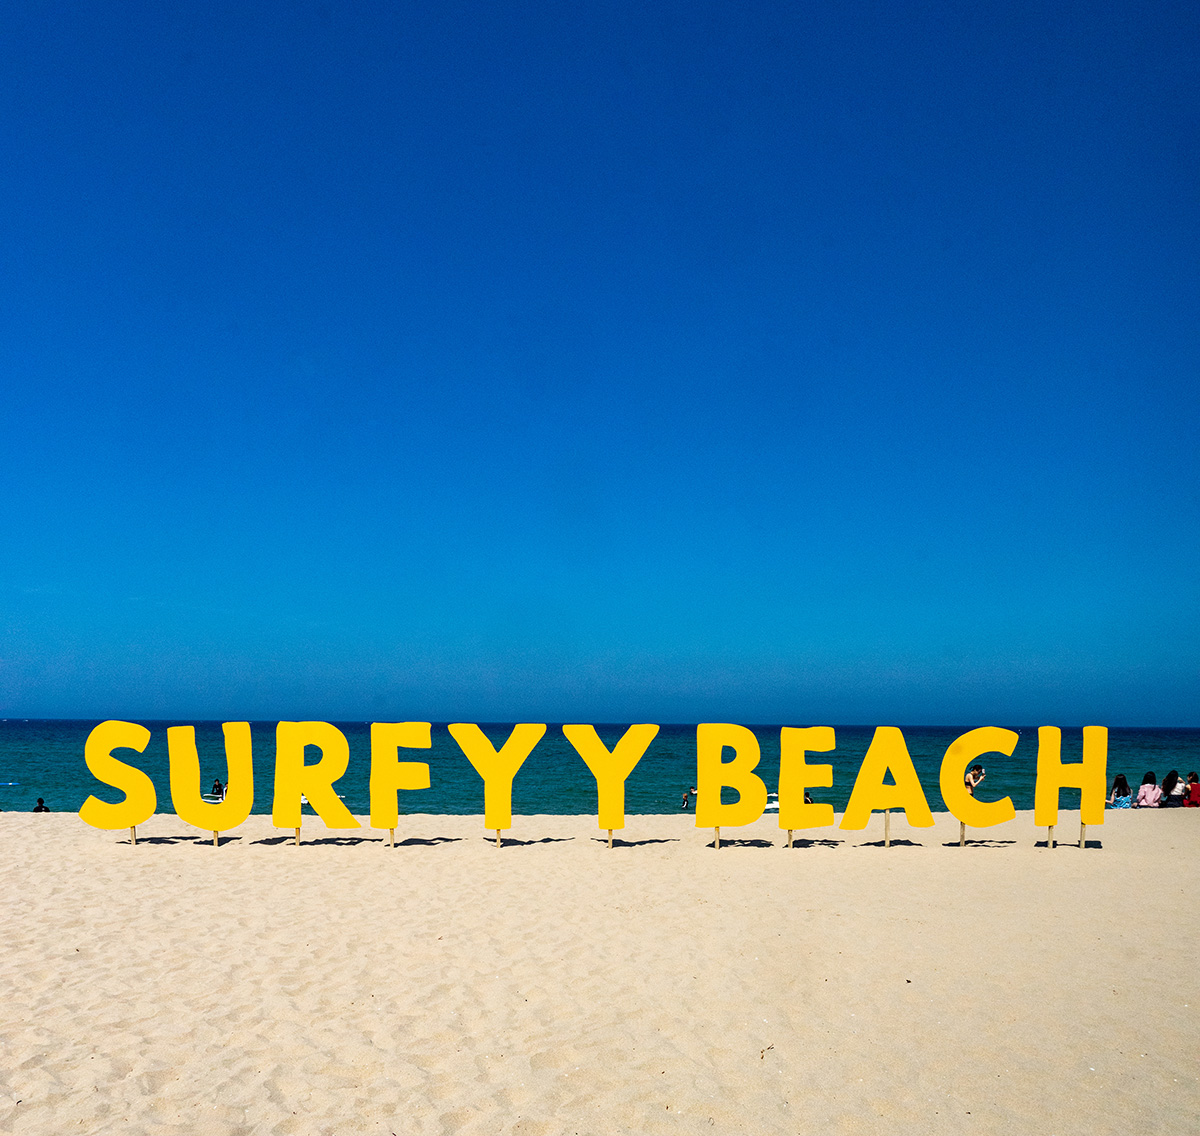 SURFFY BEACH